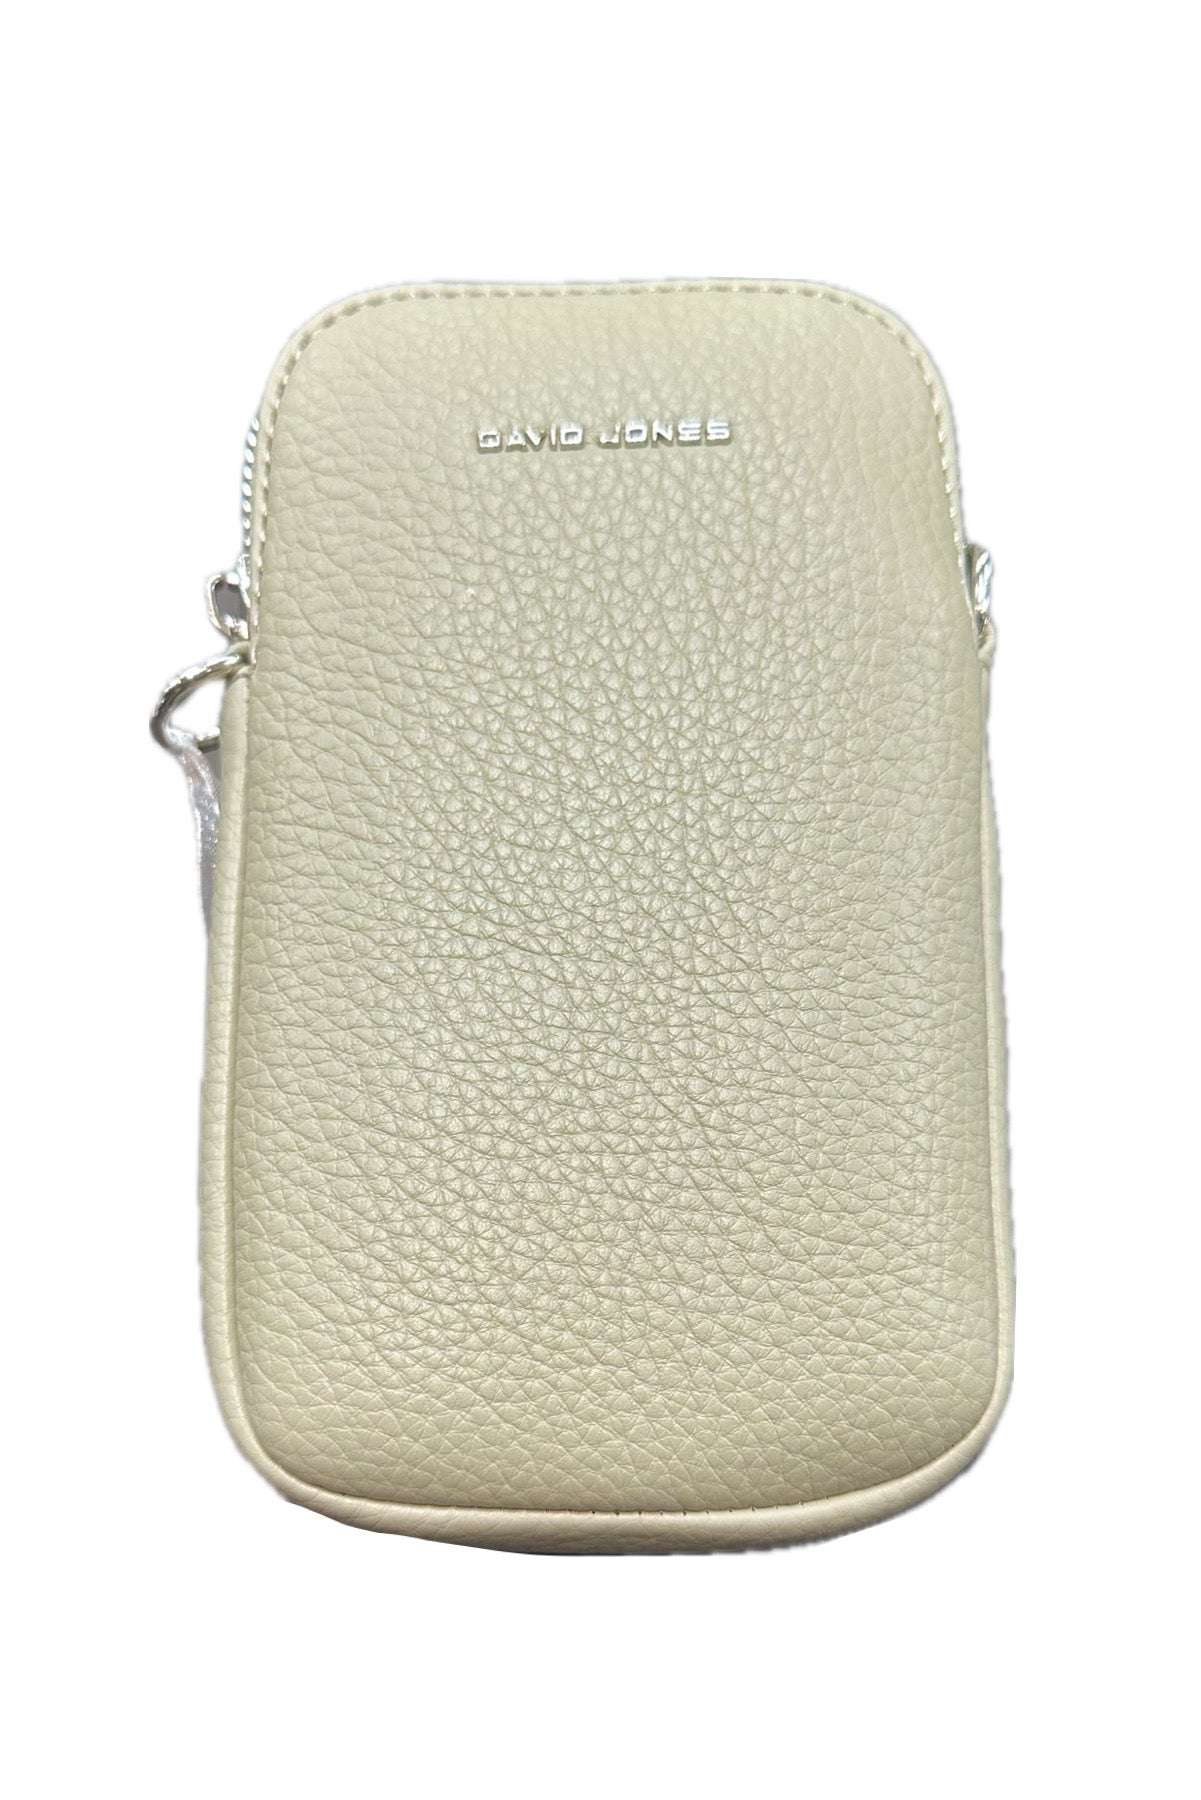 David Jones Phone Crossbody Handbag - Pale Green (Silver fittings)